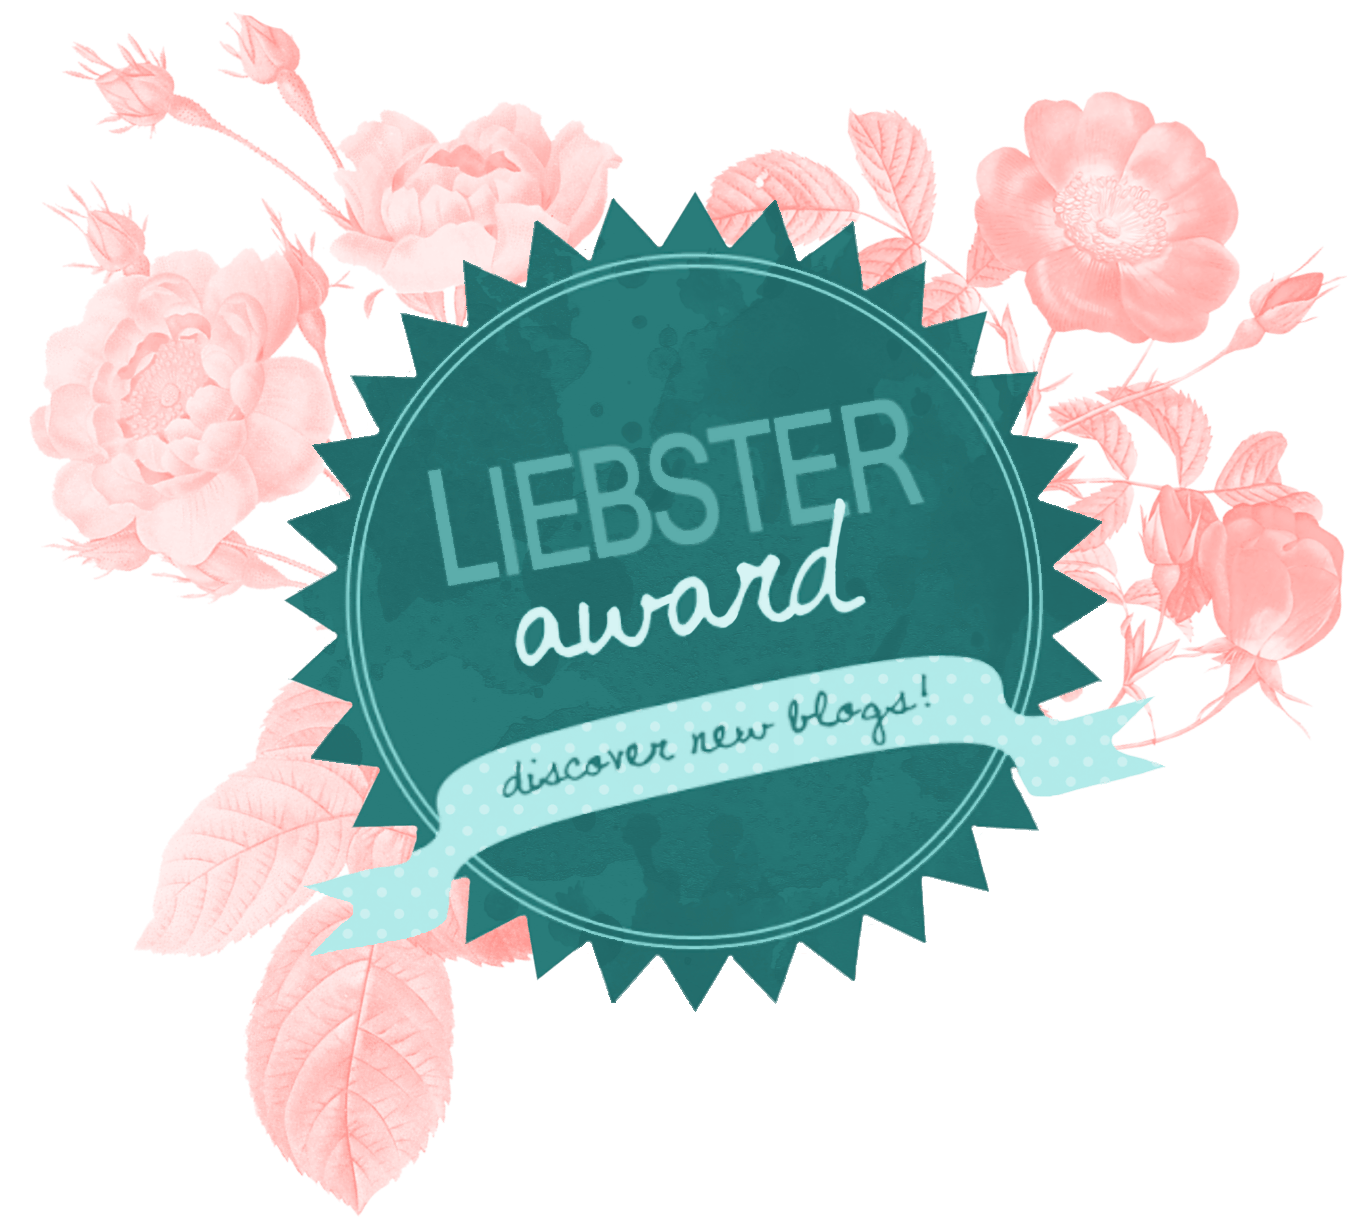 hesaidorshesaid liebster award 2018